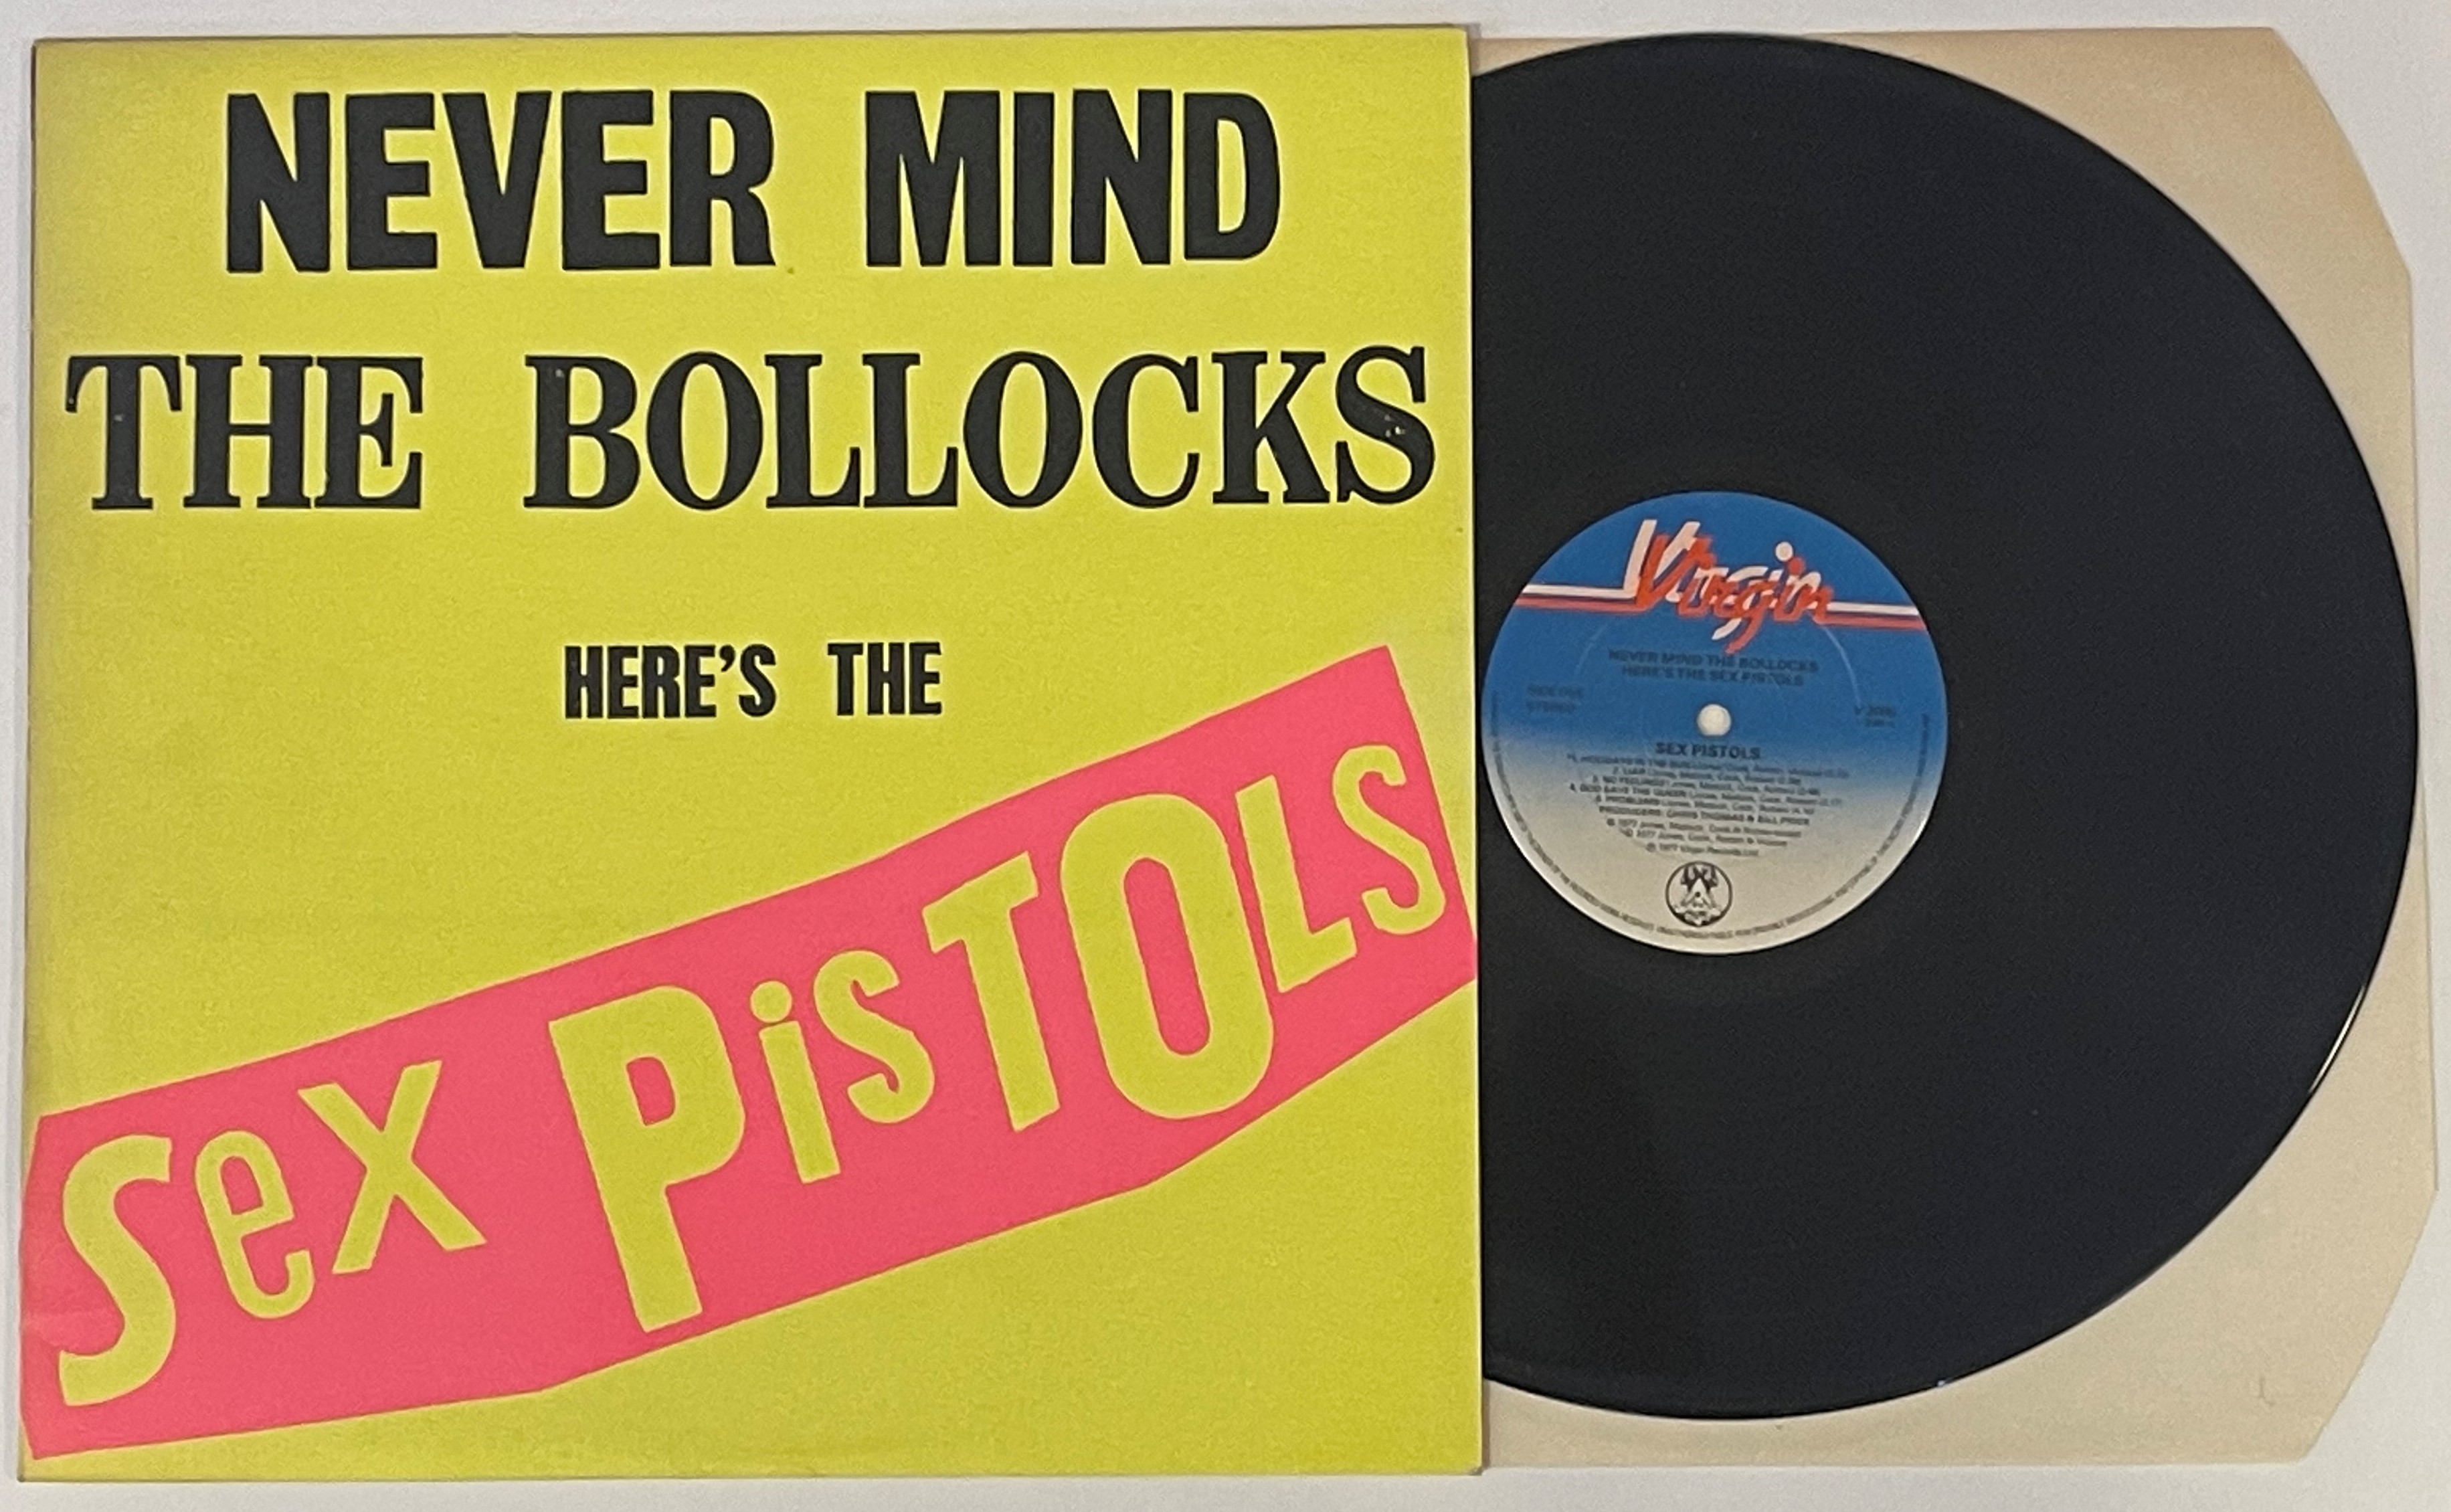 Lot 42 - SEX PISTOLS - NEVER MIND THE BOLLOCKS LP (UK '